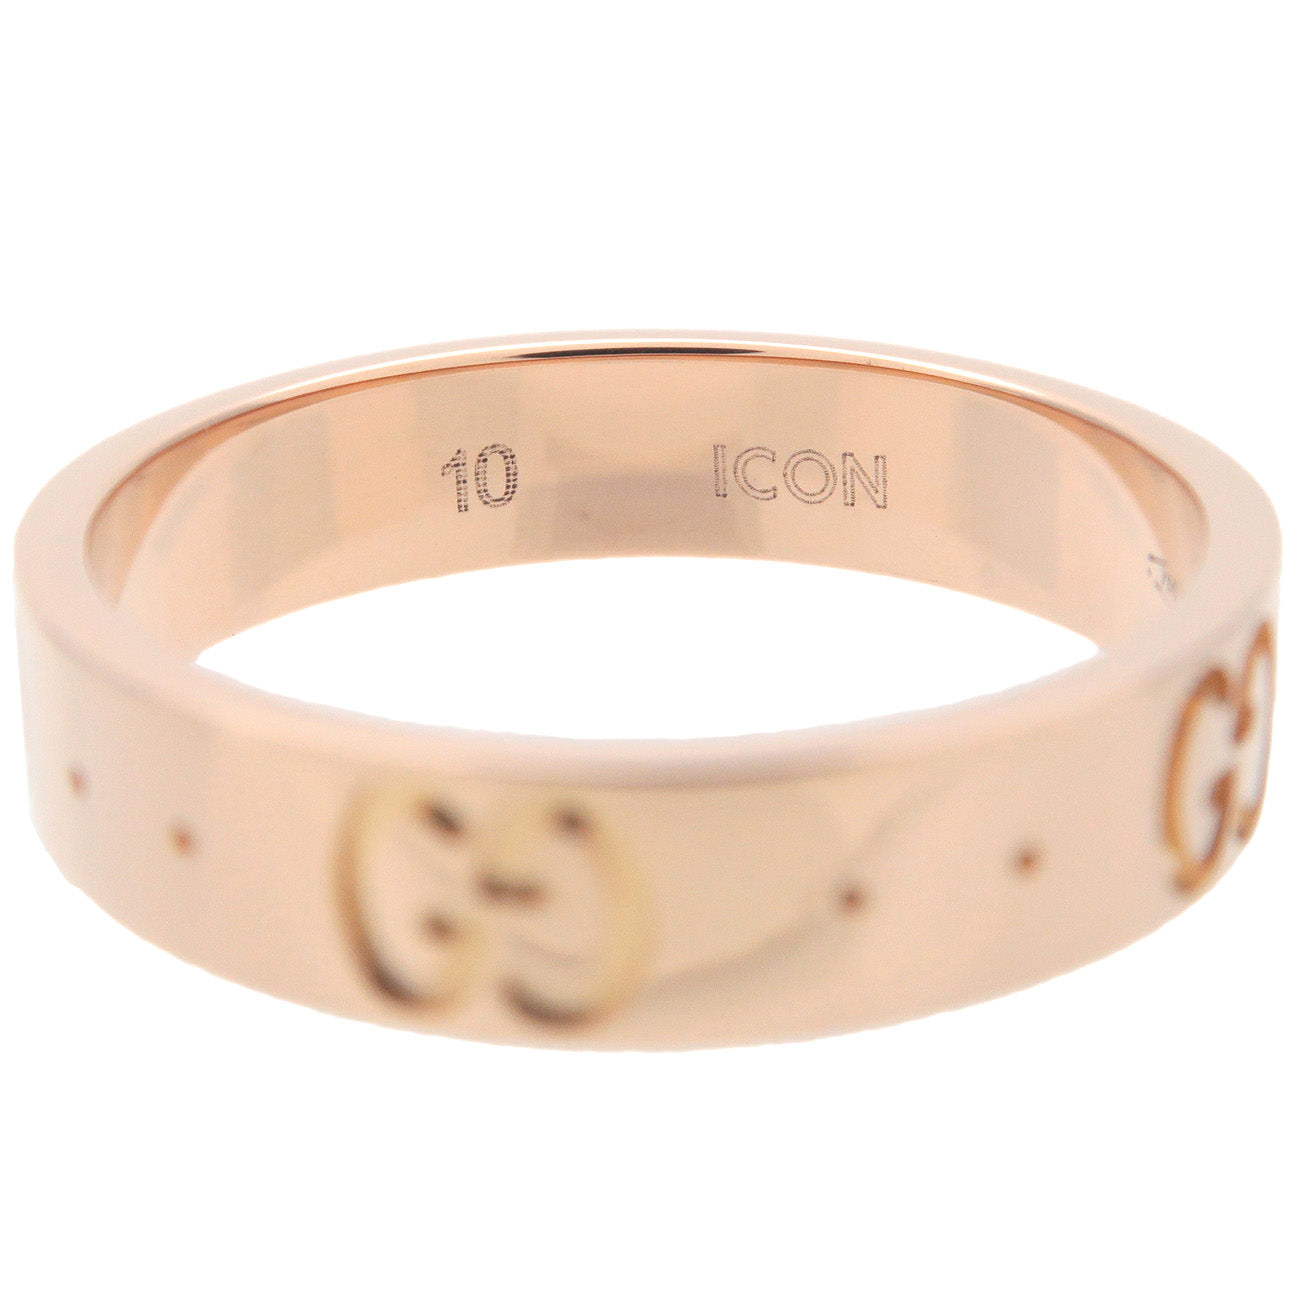 GUCCI Icon Ring K18 750PG Rose Gold #10 US5-5.5 EU50 HK11.5